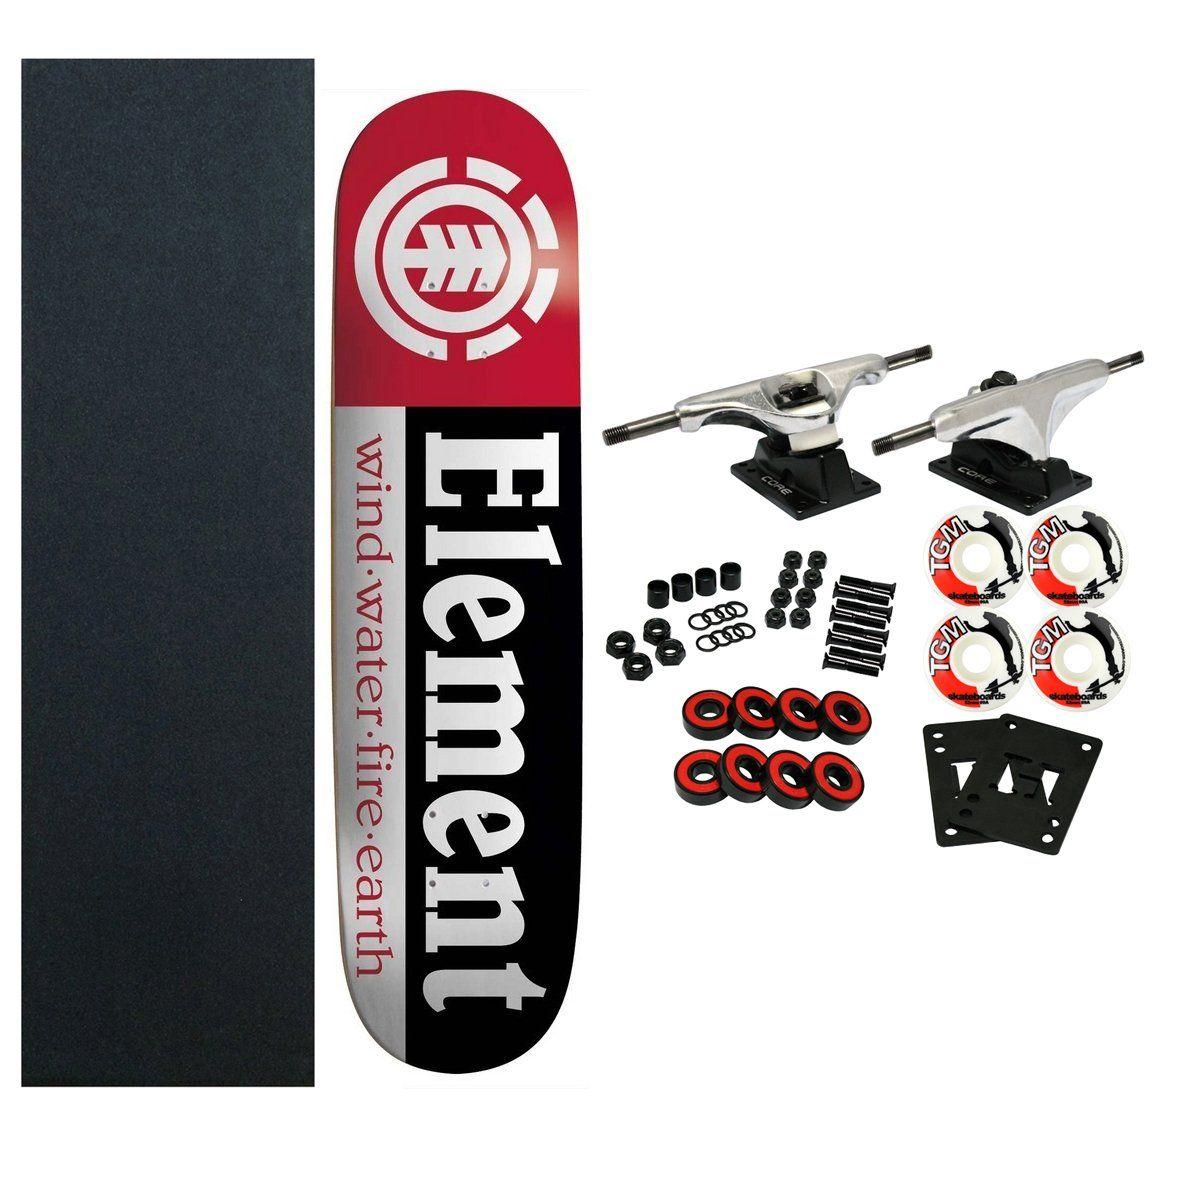 Element Skate Logo - Amazon.com : ELEMENT Skateboards SECTION Complete SKATEBOARD Black ...